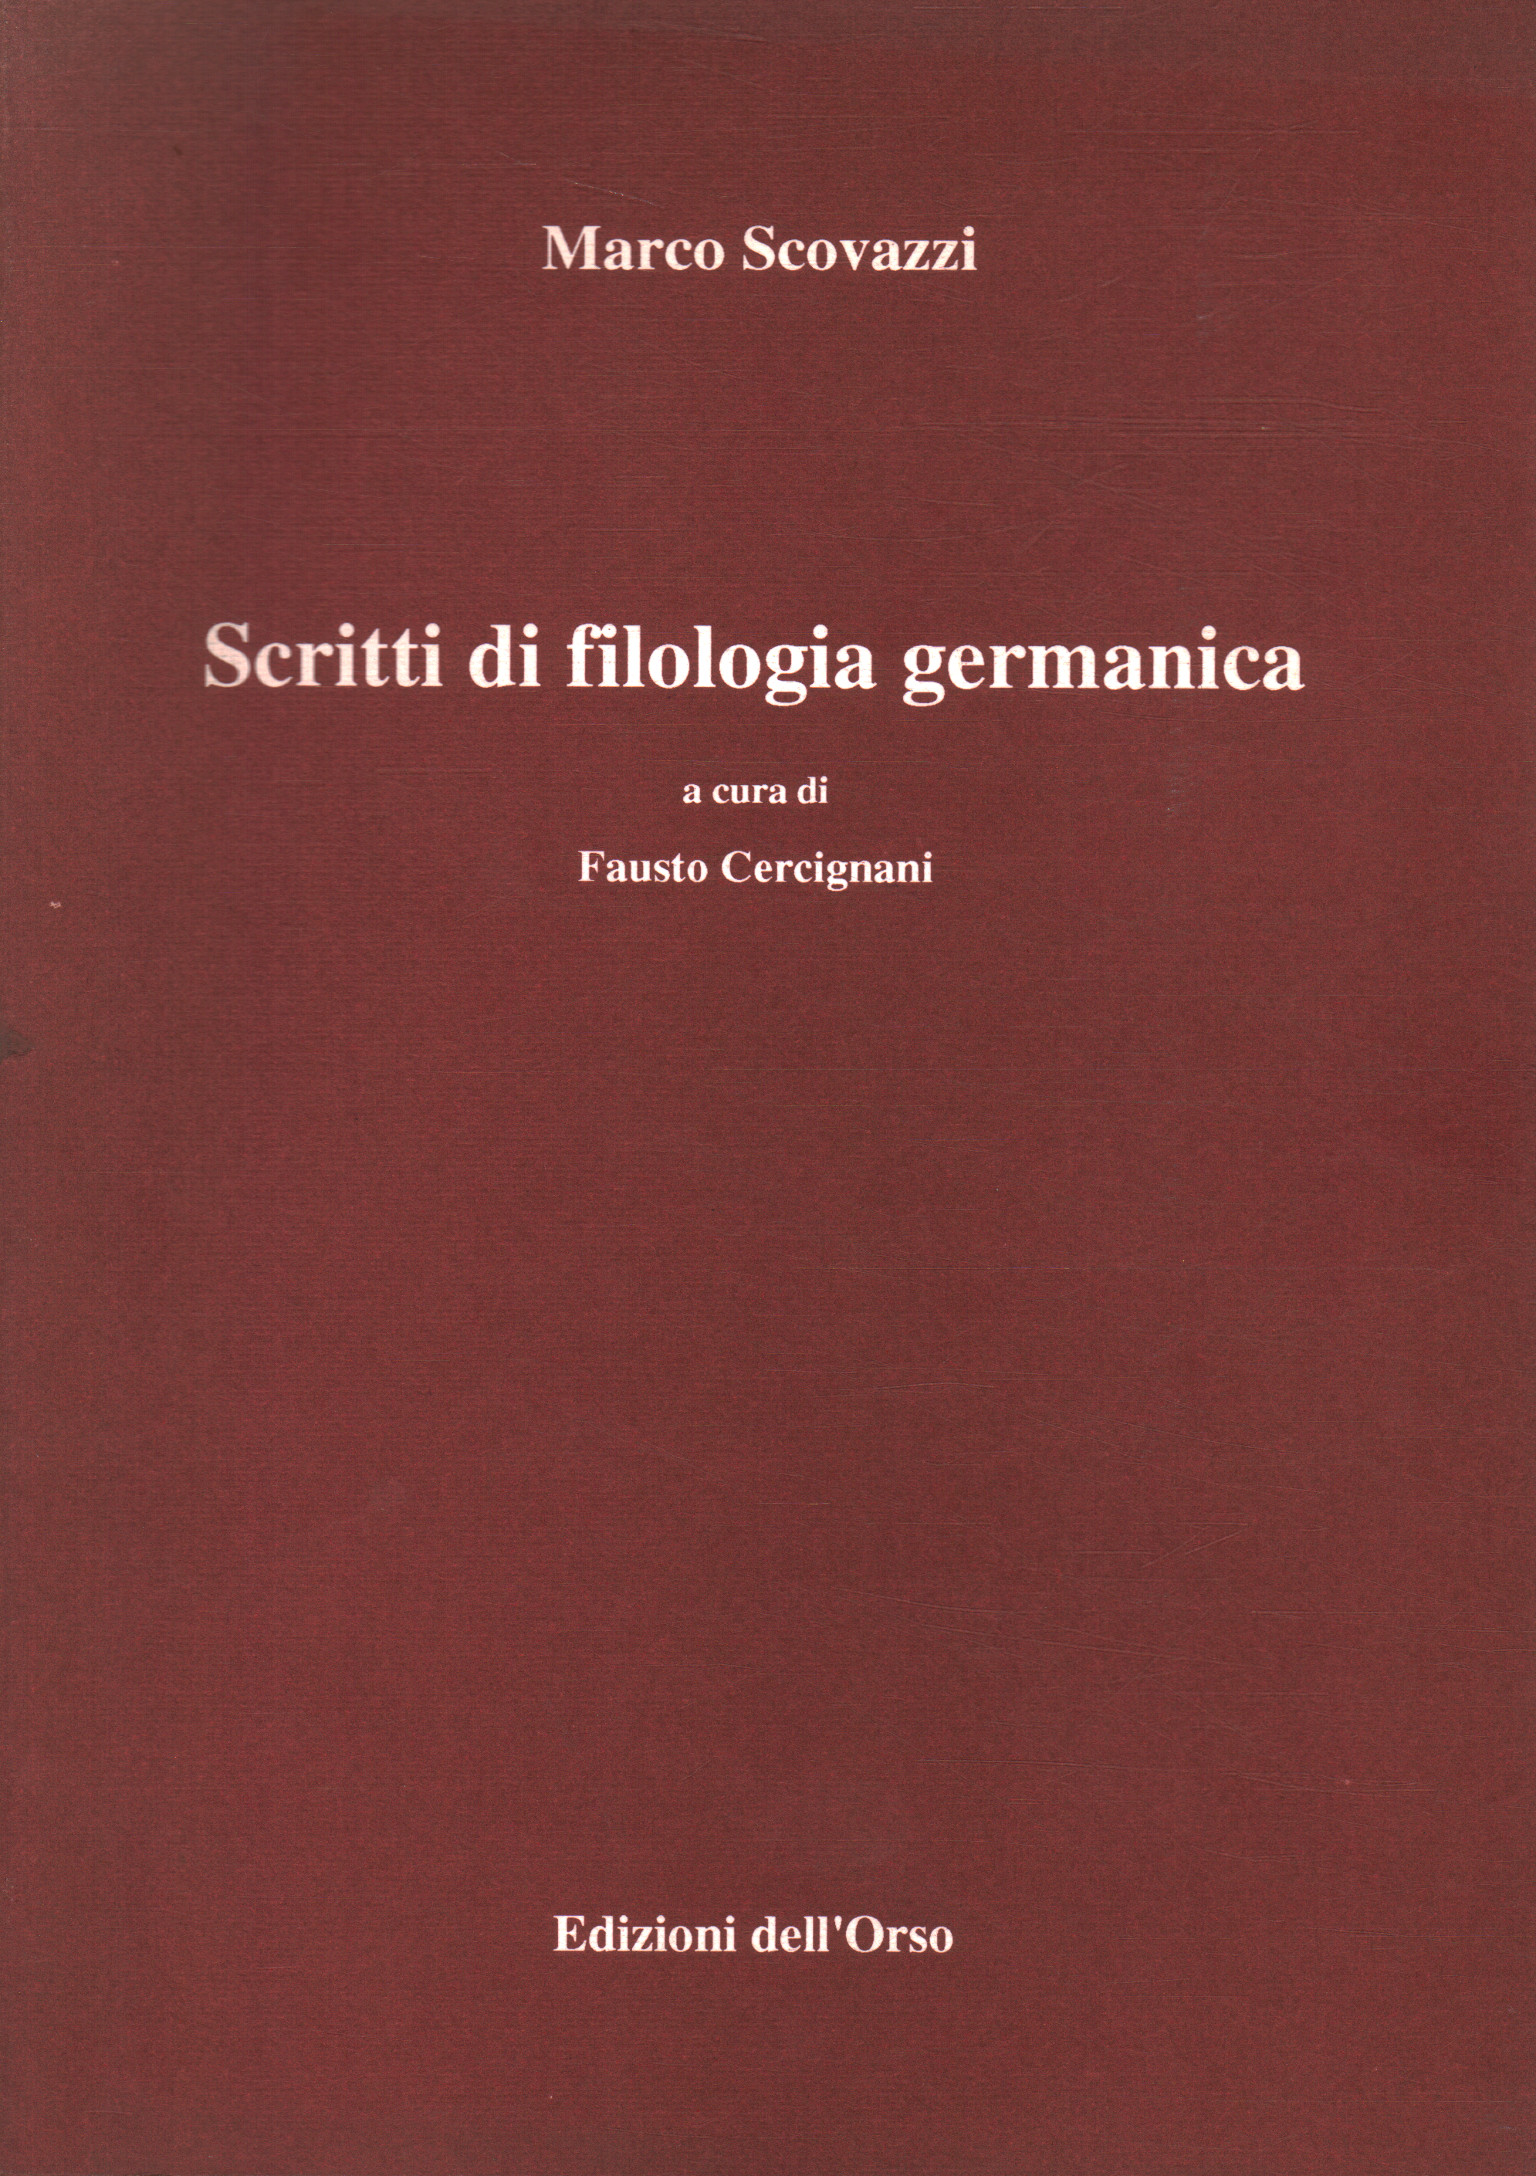 Writings of Germanic Philology